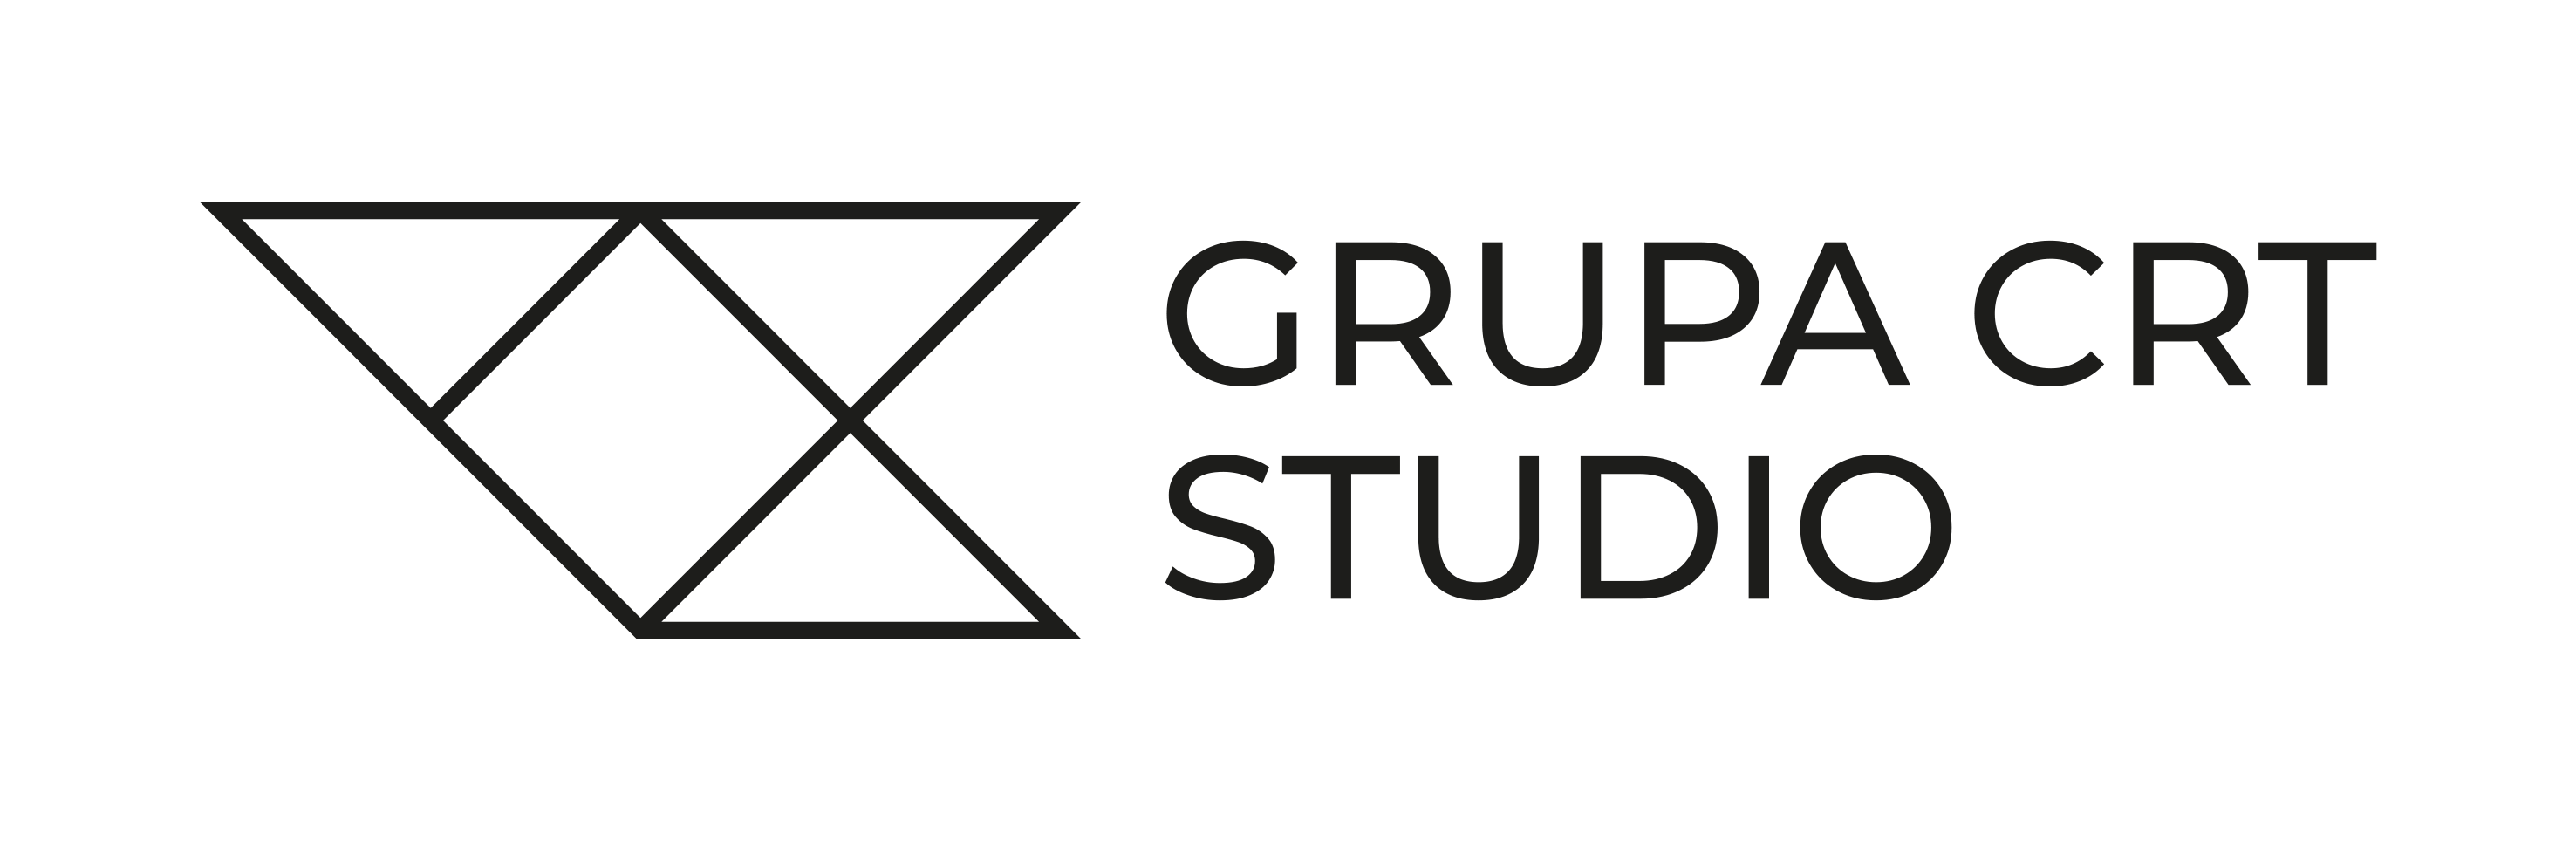 logo-grupa-crt-studio-black